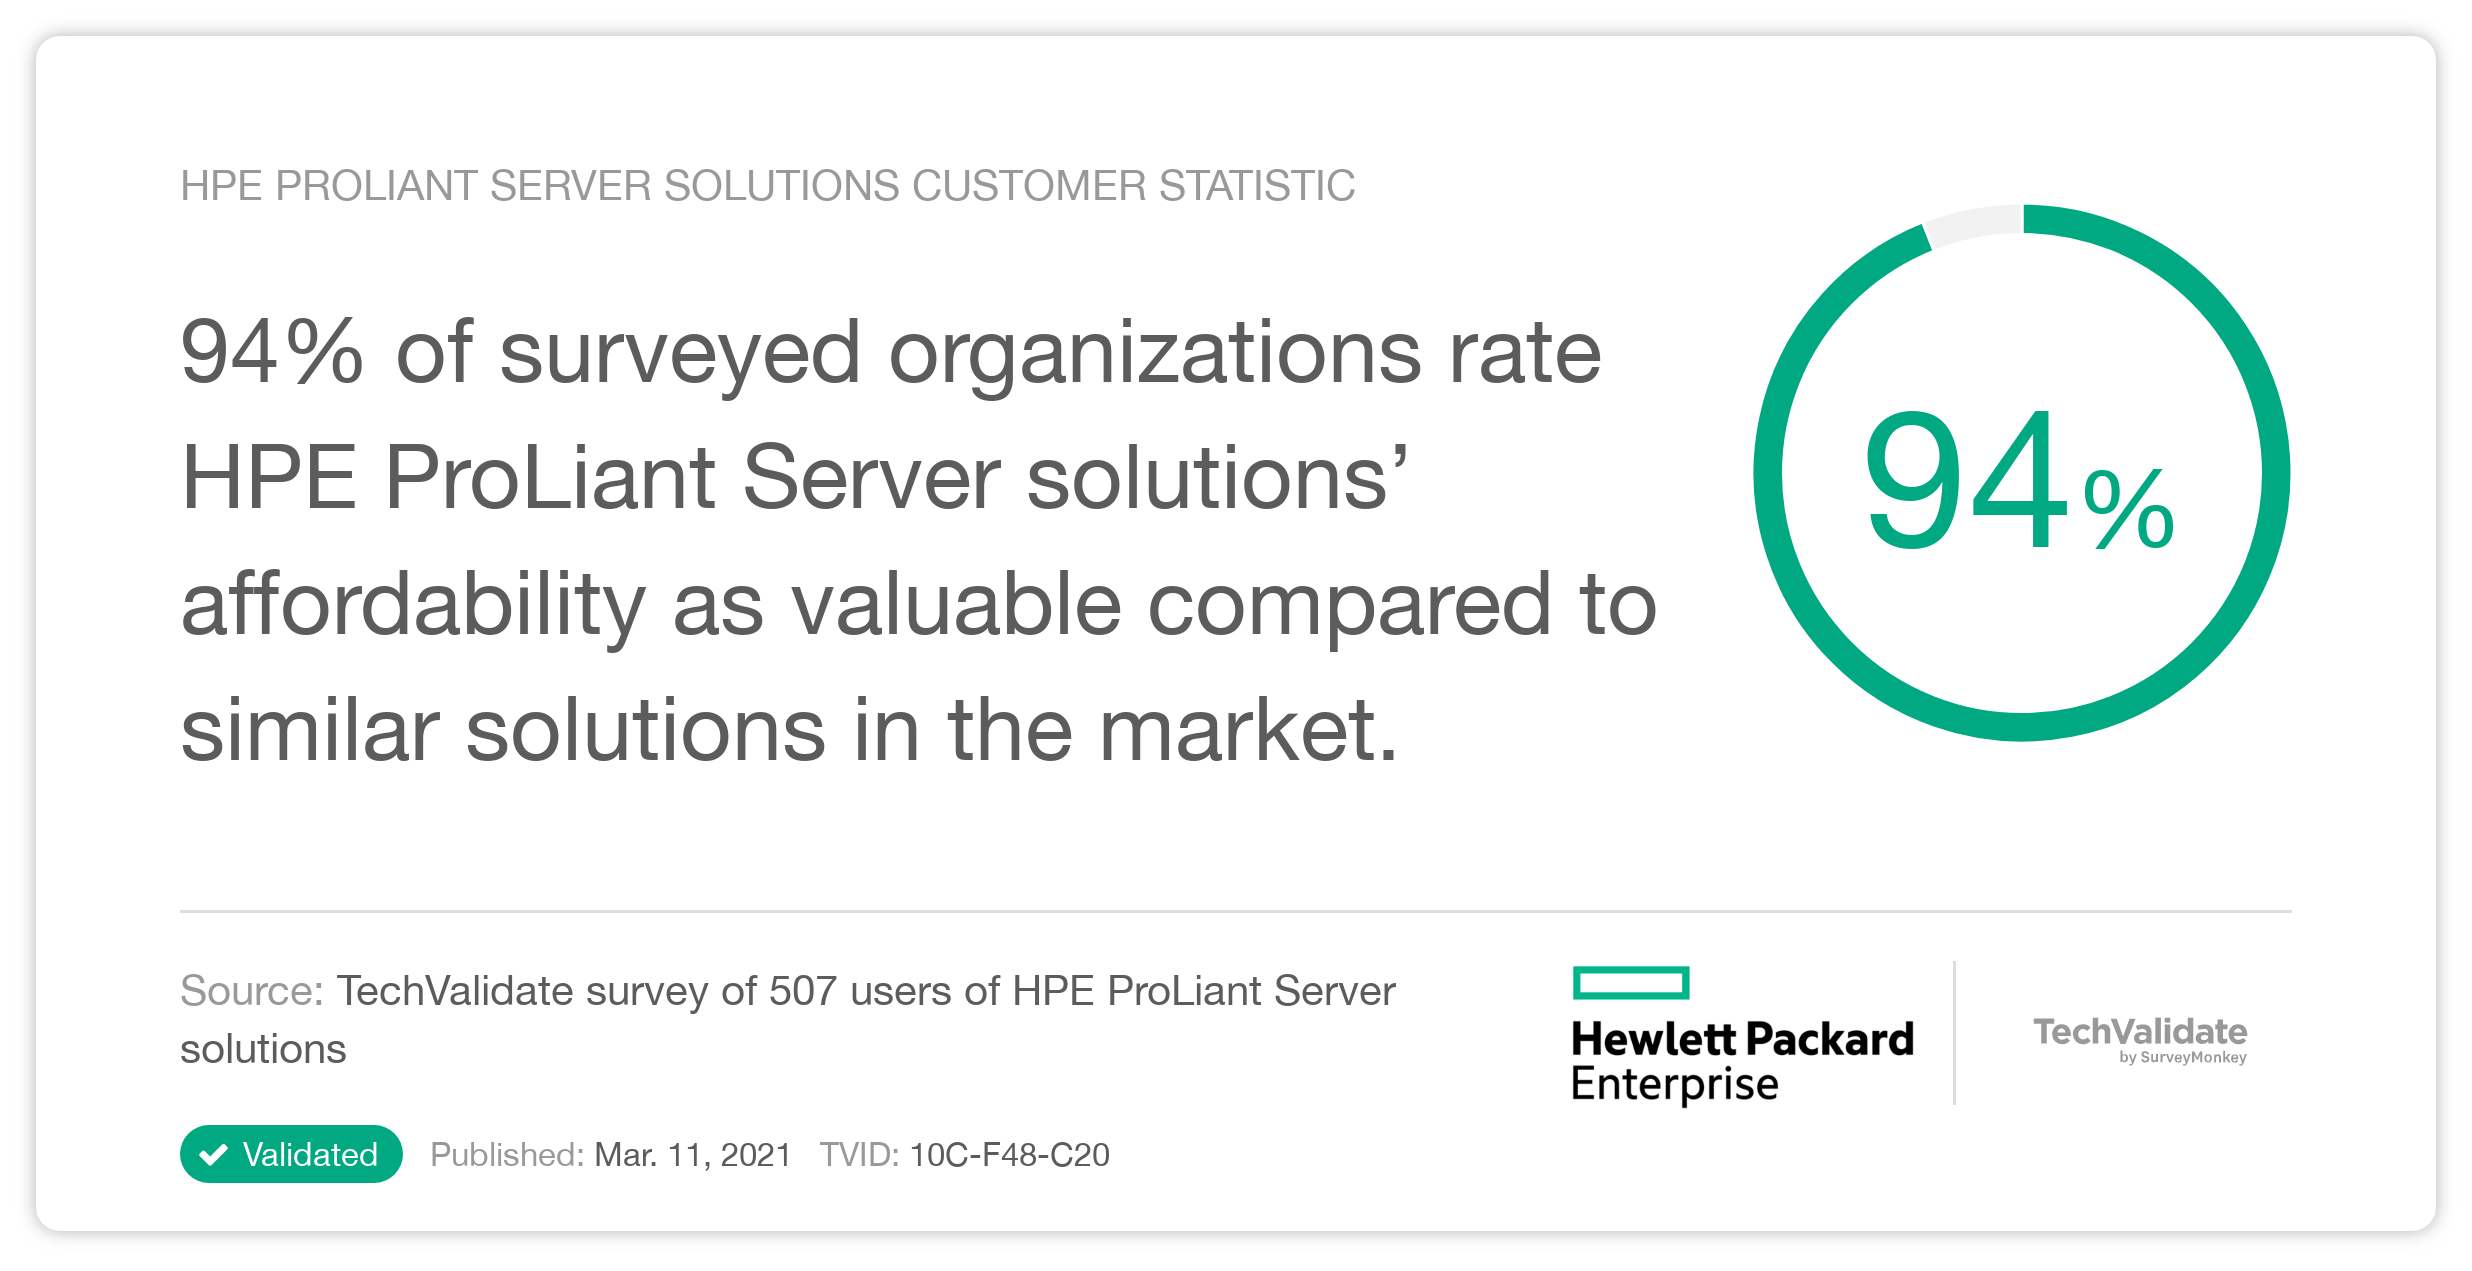 HPE ProLiant Server solutions Customer Statistic